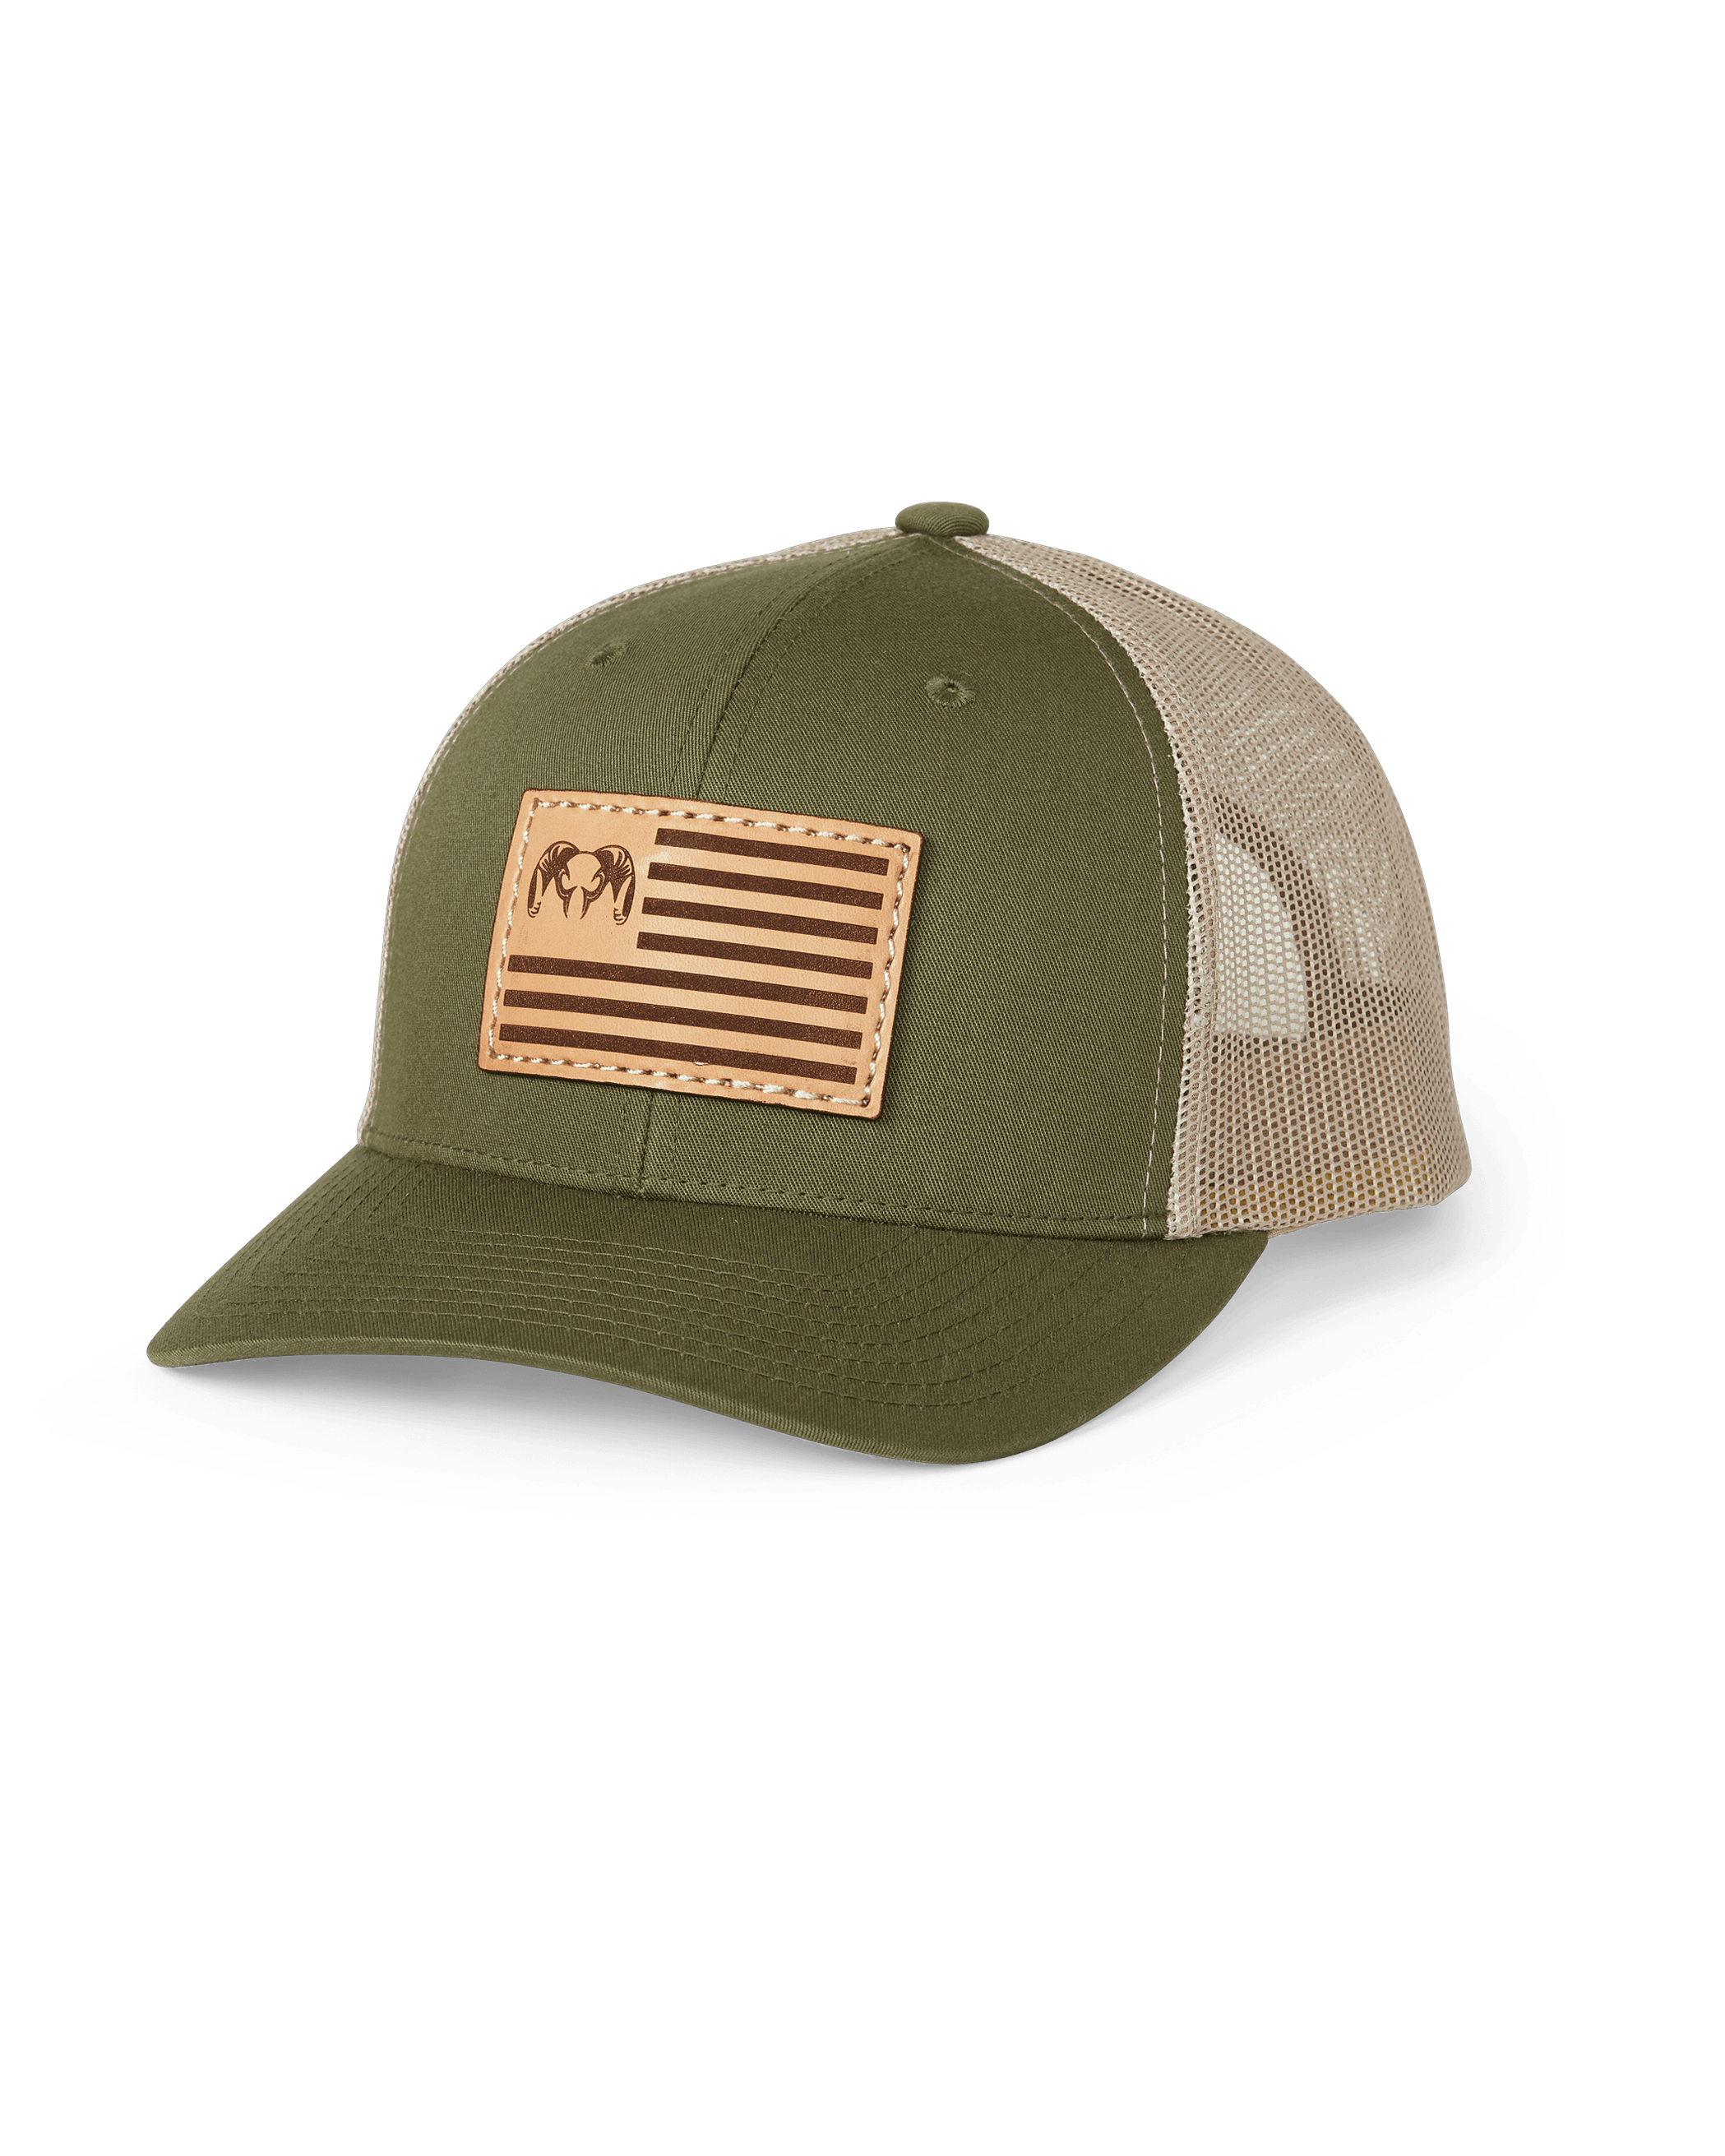 KUIU Patriot Ram Flag Trucker Hat in Moss/Khaki